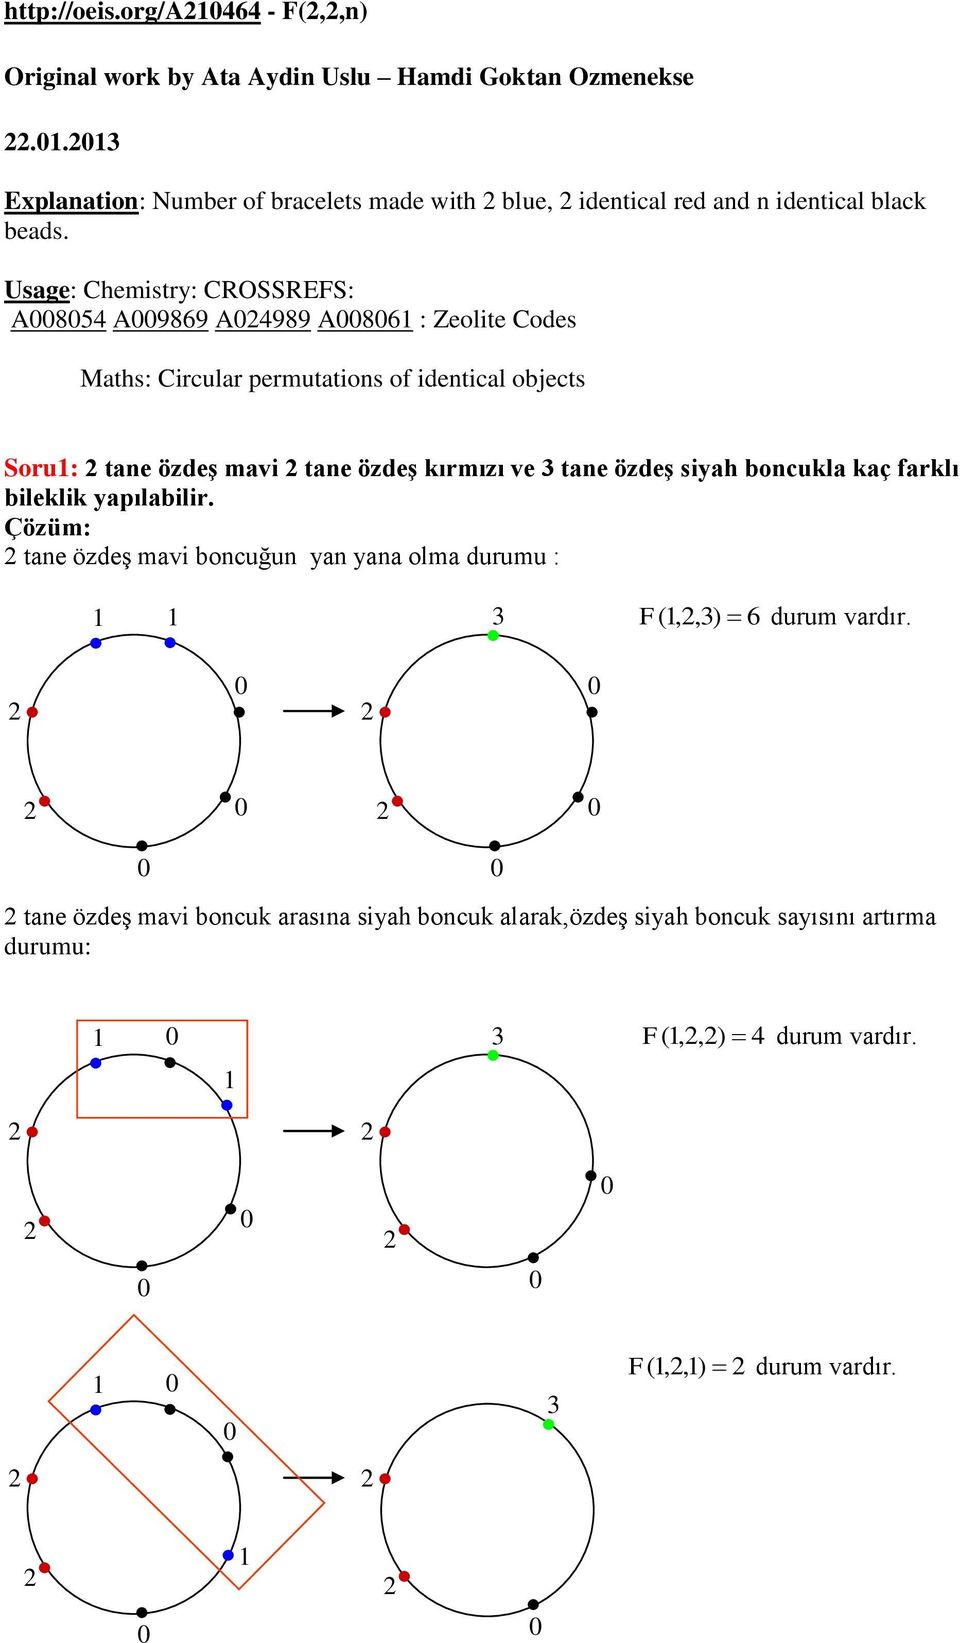 Usage: Chemistry: CROSSRES: A85 A989 A989 A8 : Zeolite Codes Maths: Circular permutatios of idetical objects Soru: tae özdeş mavi